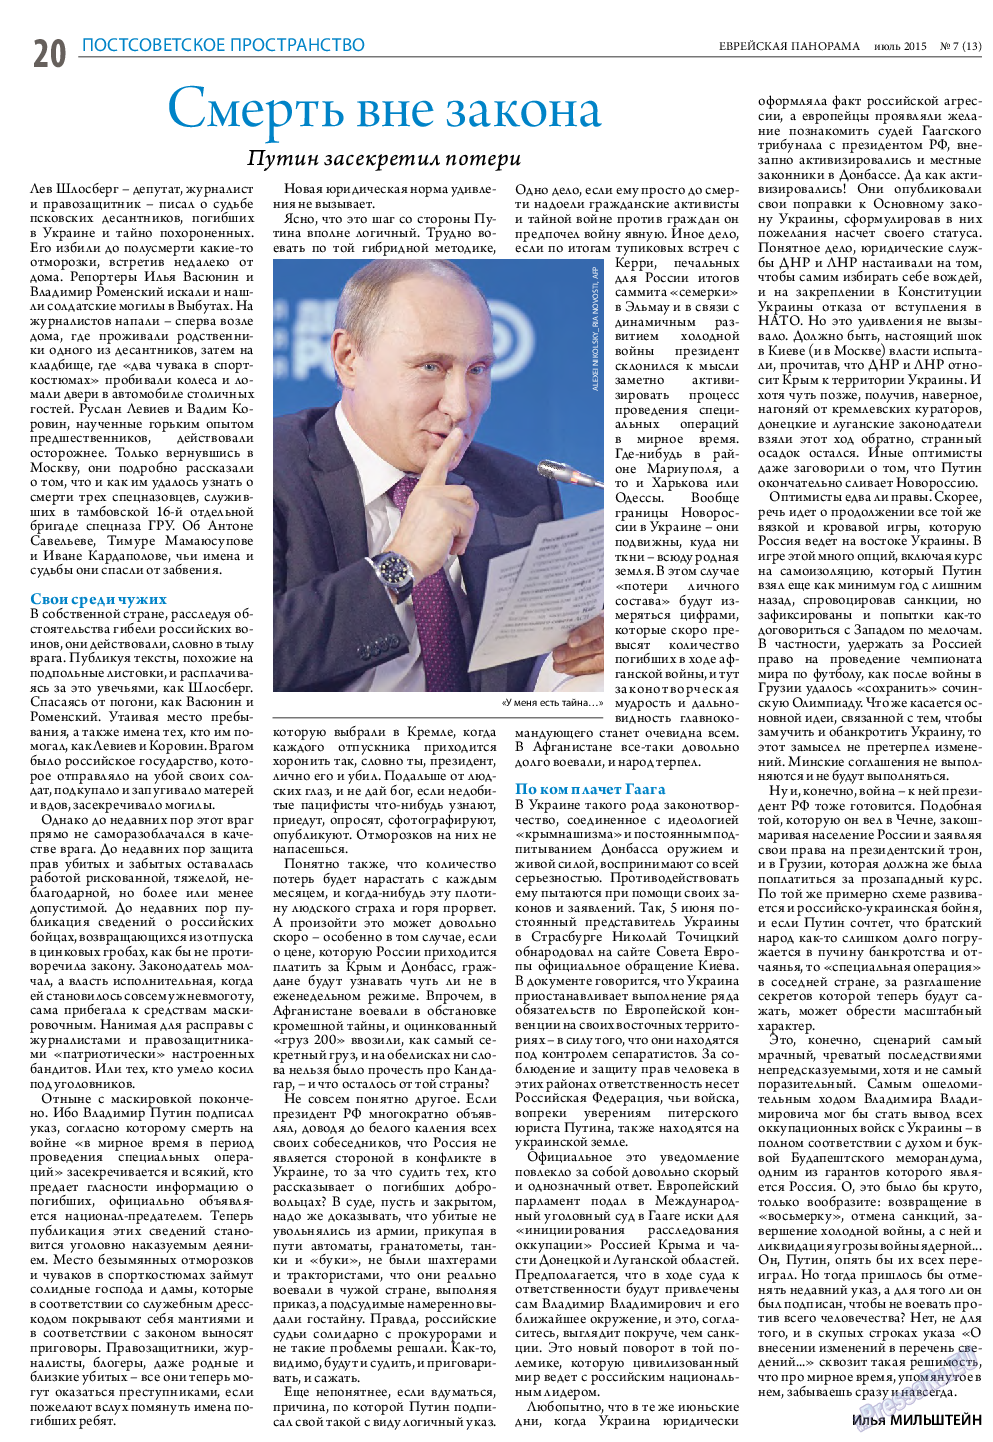 Еврейская панорама, газета. 2015 №7 стр.20